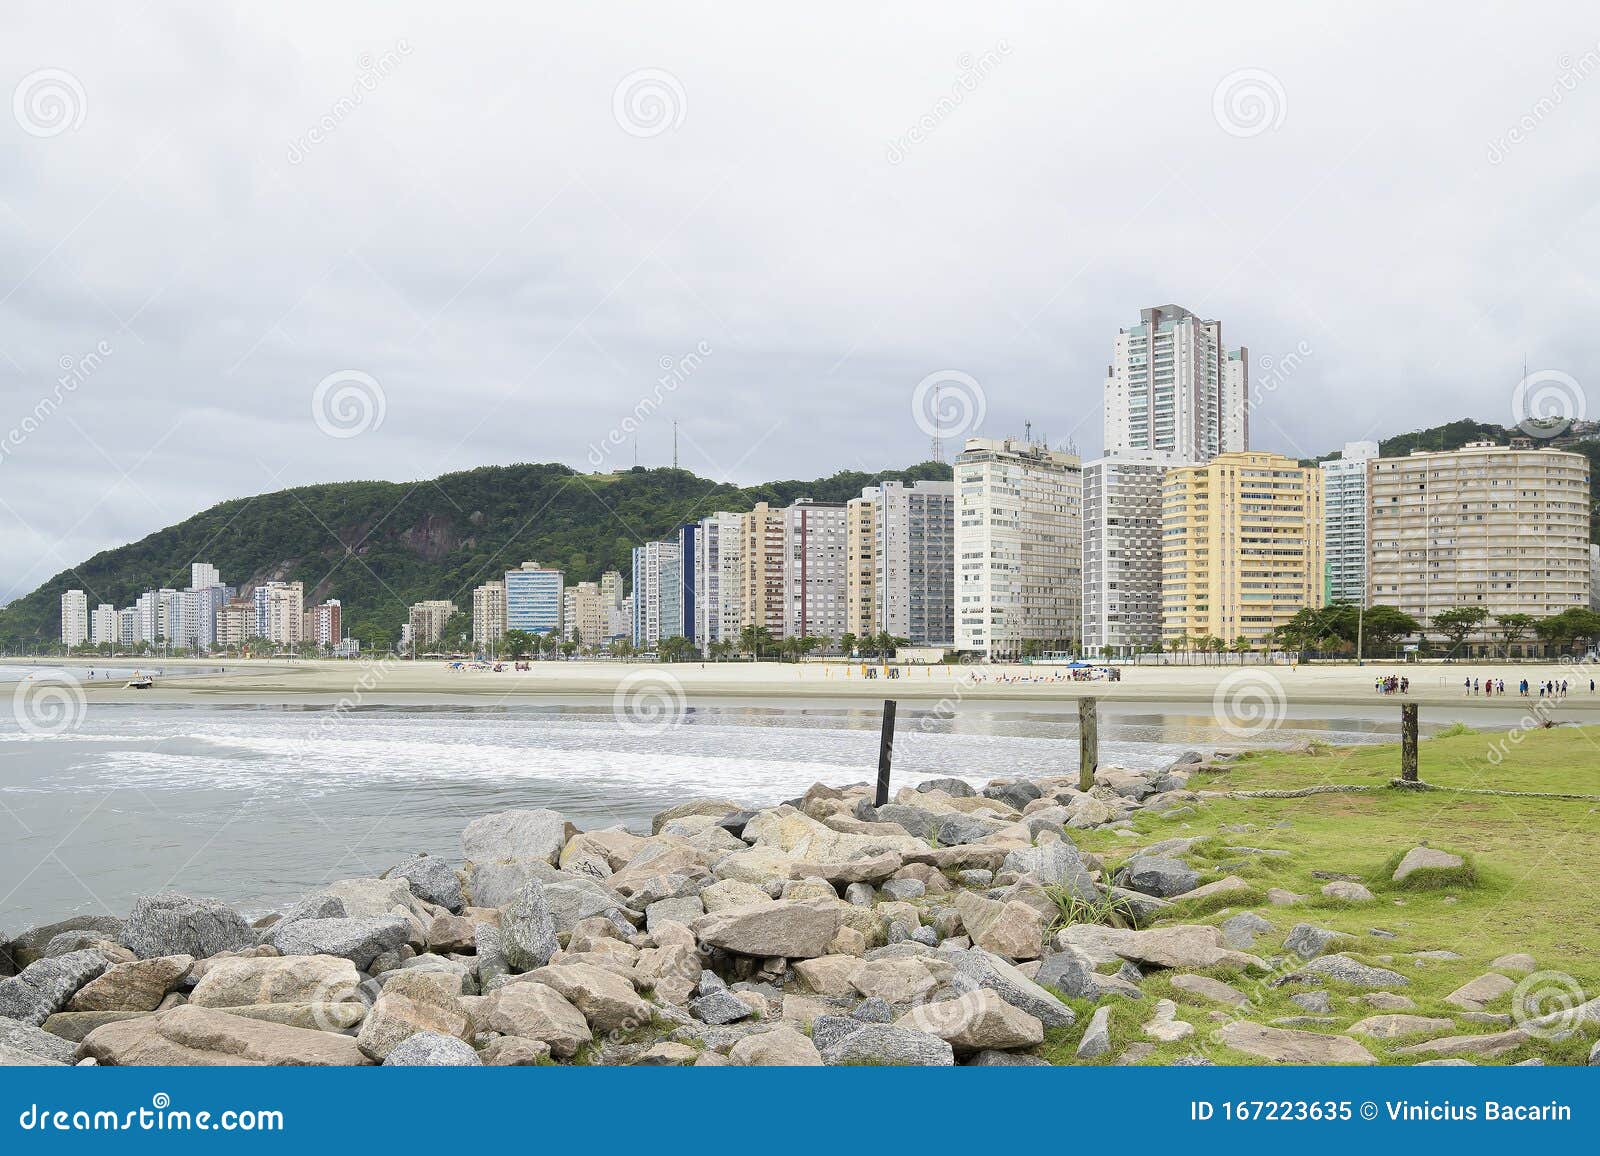 beach of santos sp brazil